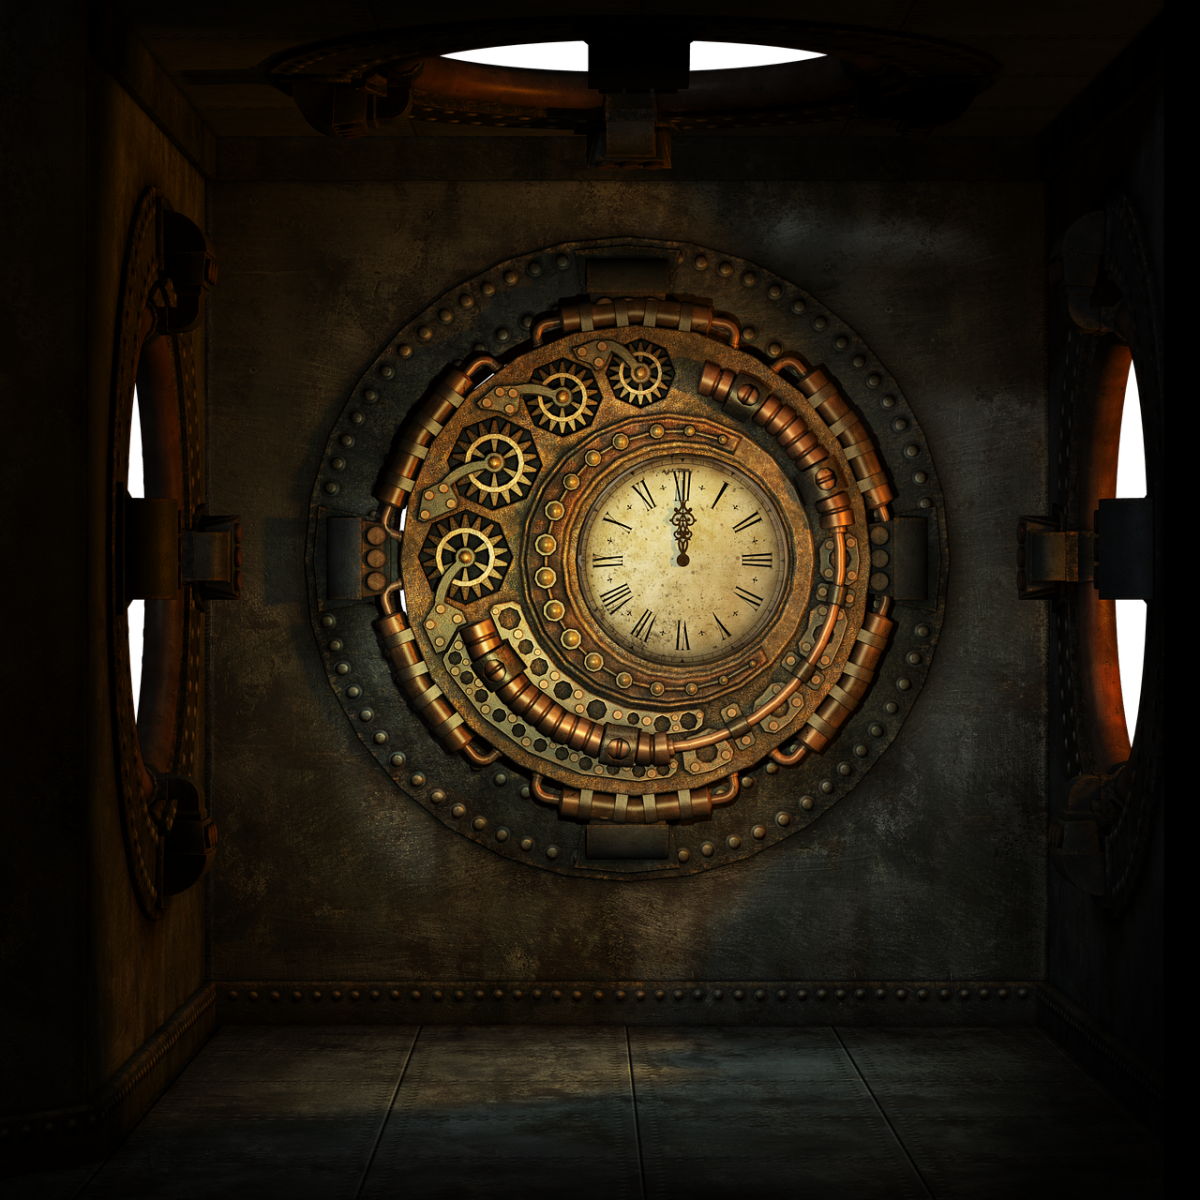 Steampunk clock courtesy 3209107 on Pixabay